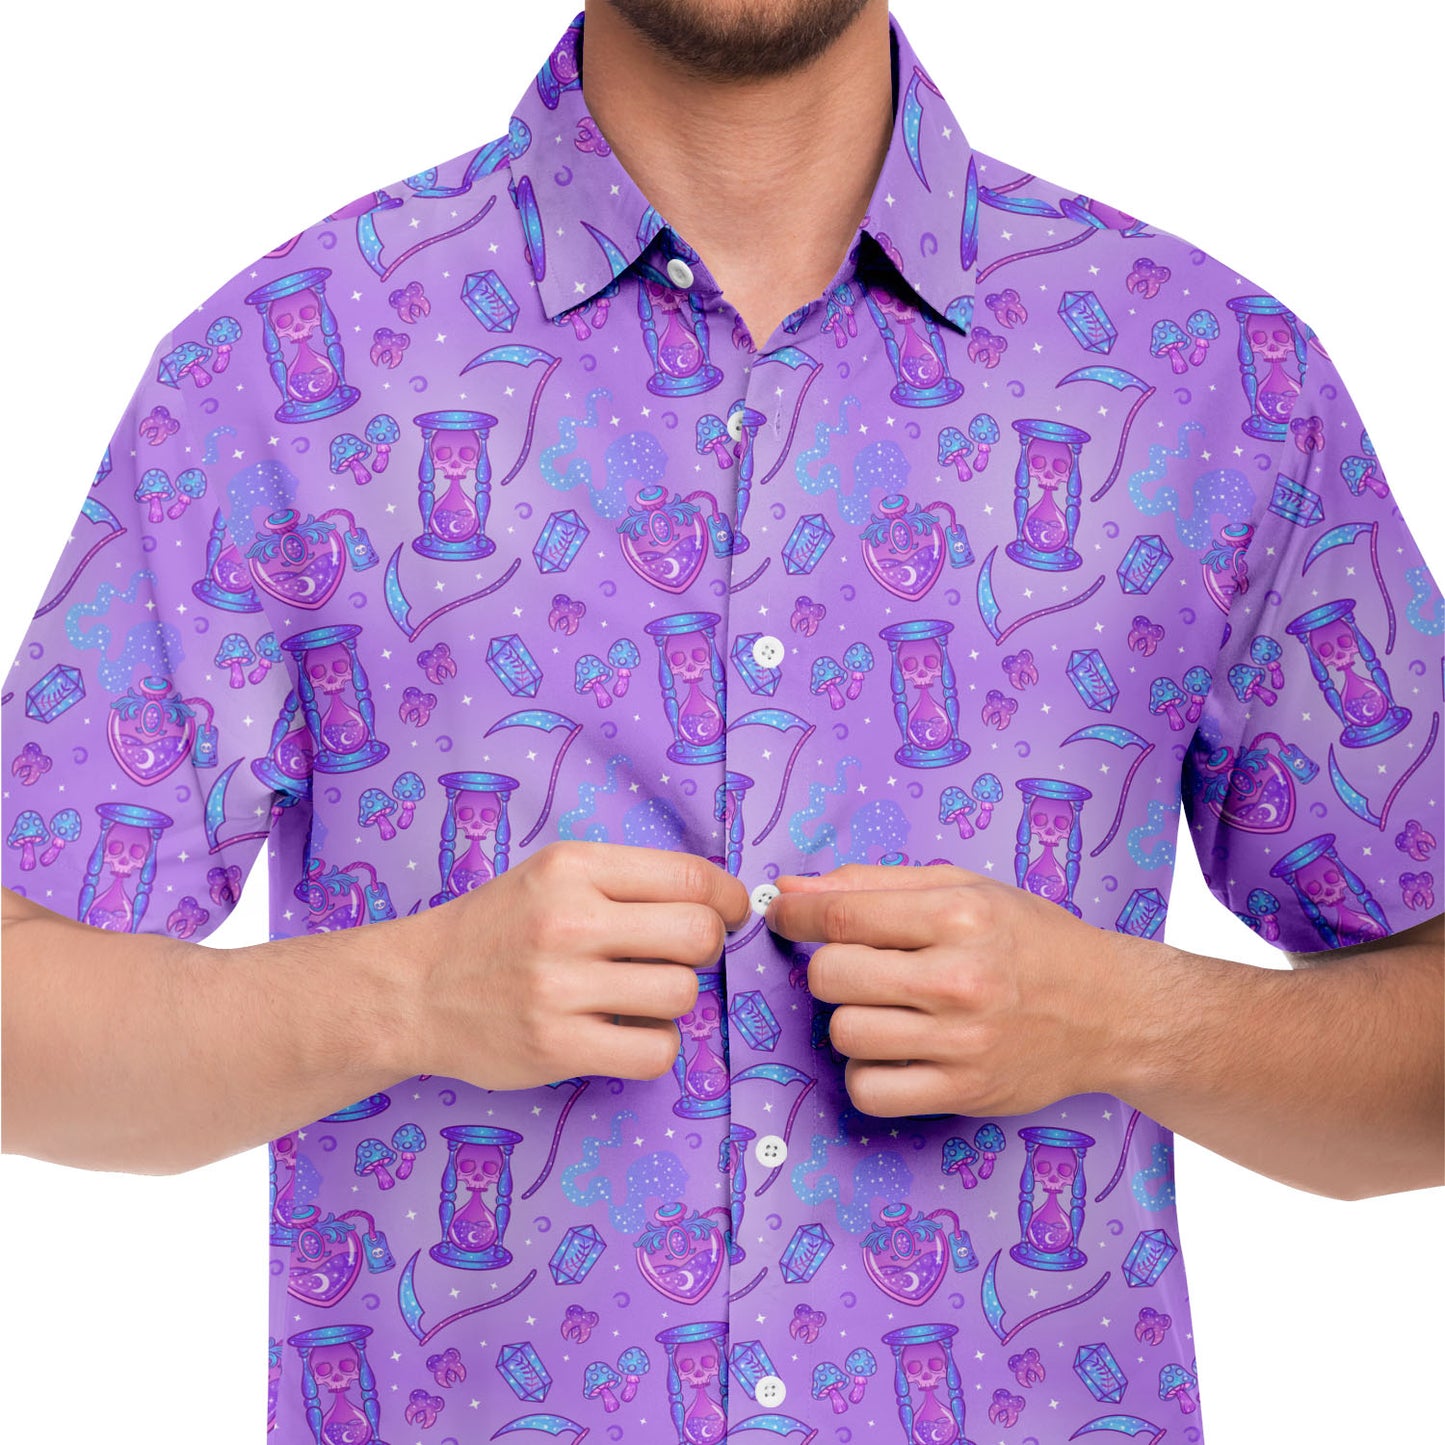 Neon Magic short sleeve button down shirt